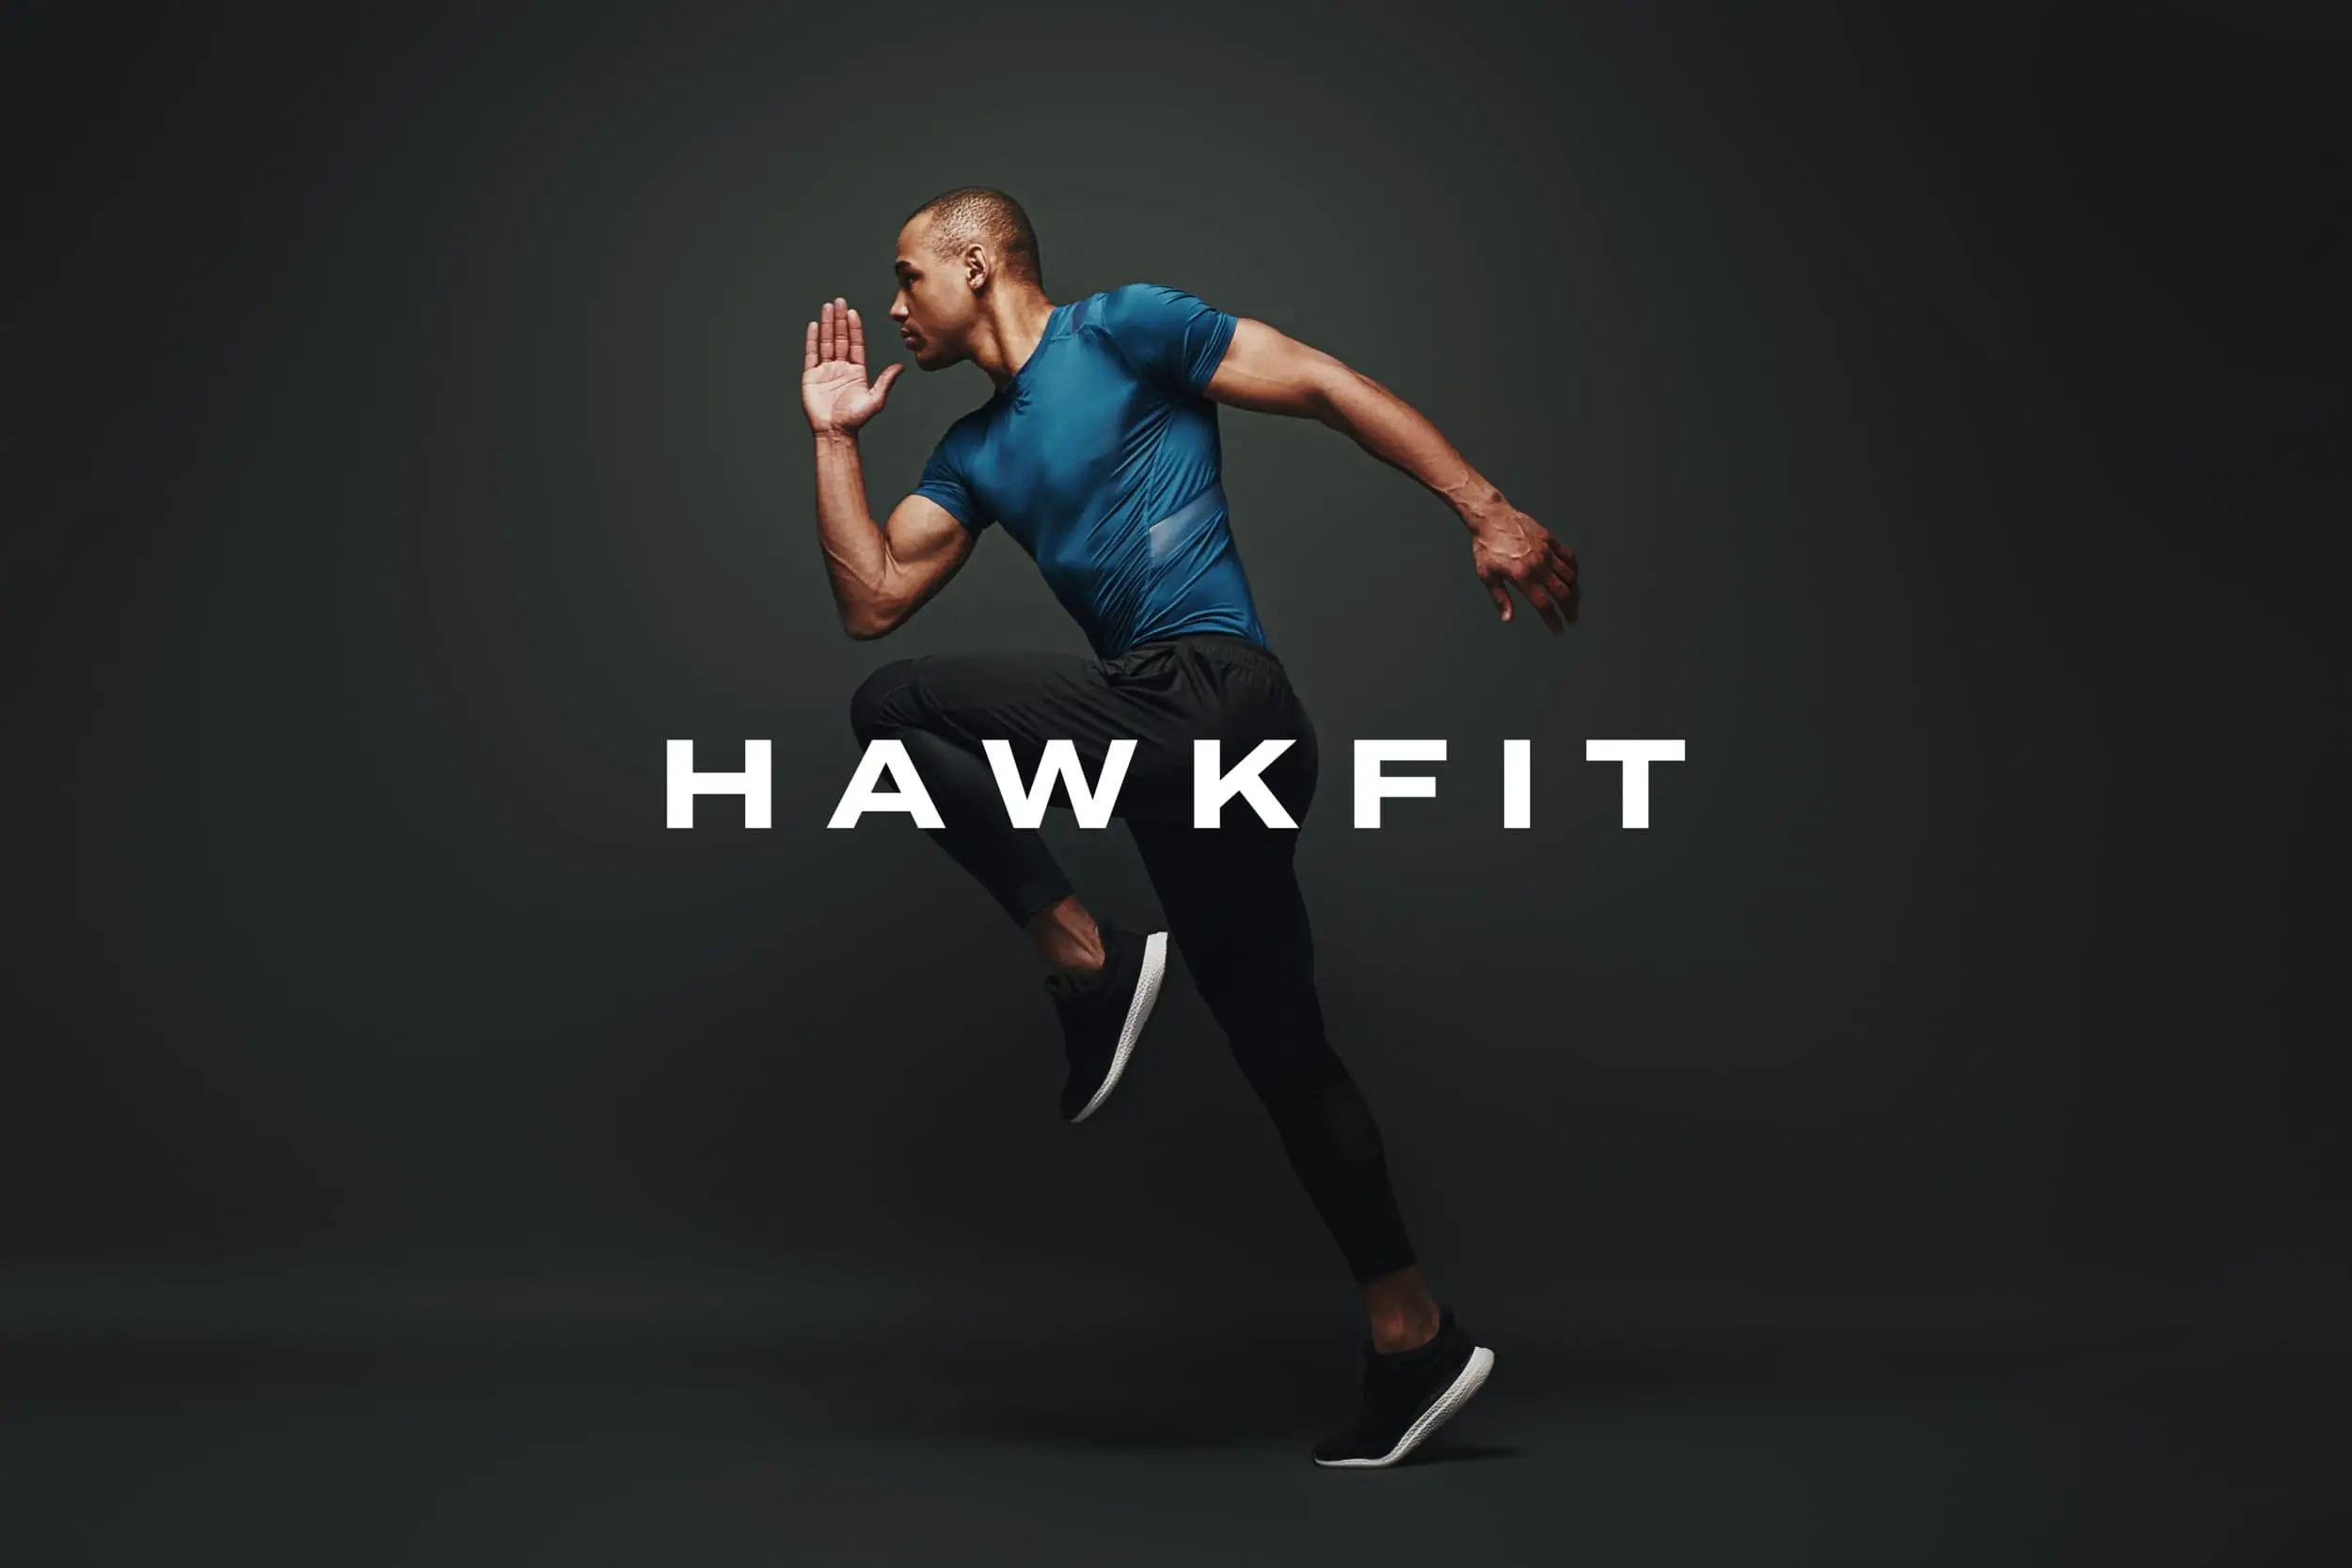 Image of Steve Hawk's fitness application, Hawkfit